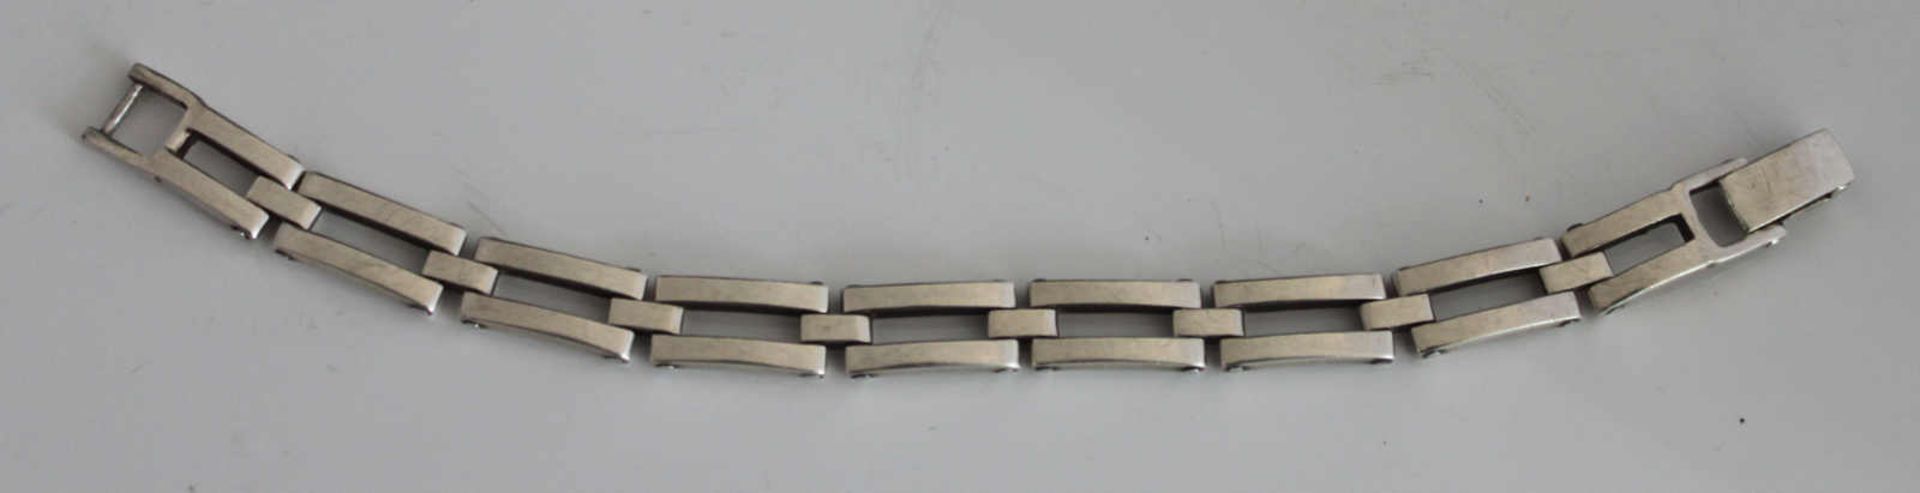 Armband, 925er Silber, moderne Form, Länge ca. 20 cm, Gewicht ca. 41 grMindestpreis: 30 EUR